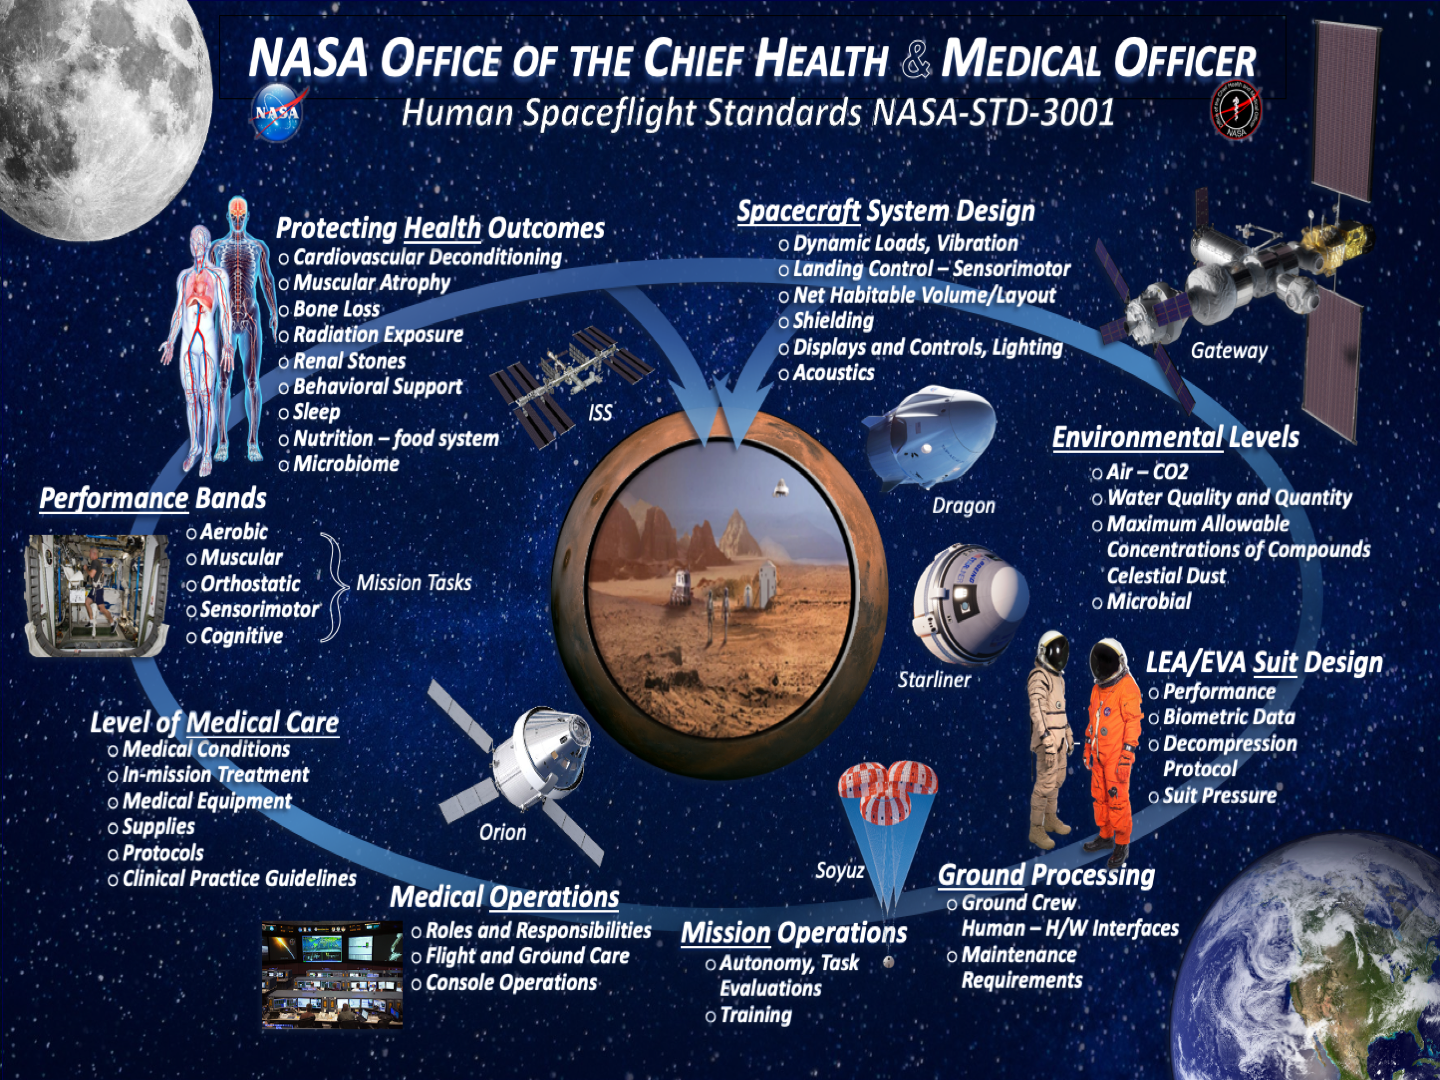 Human Spaceflight Standards NASA-STD-3001